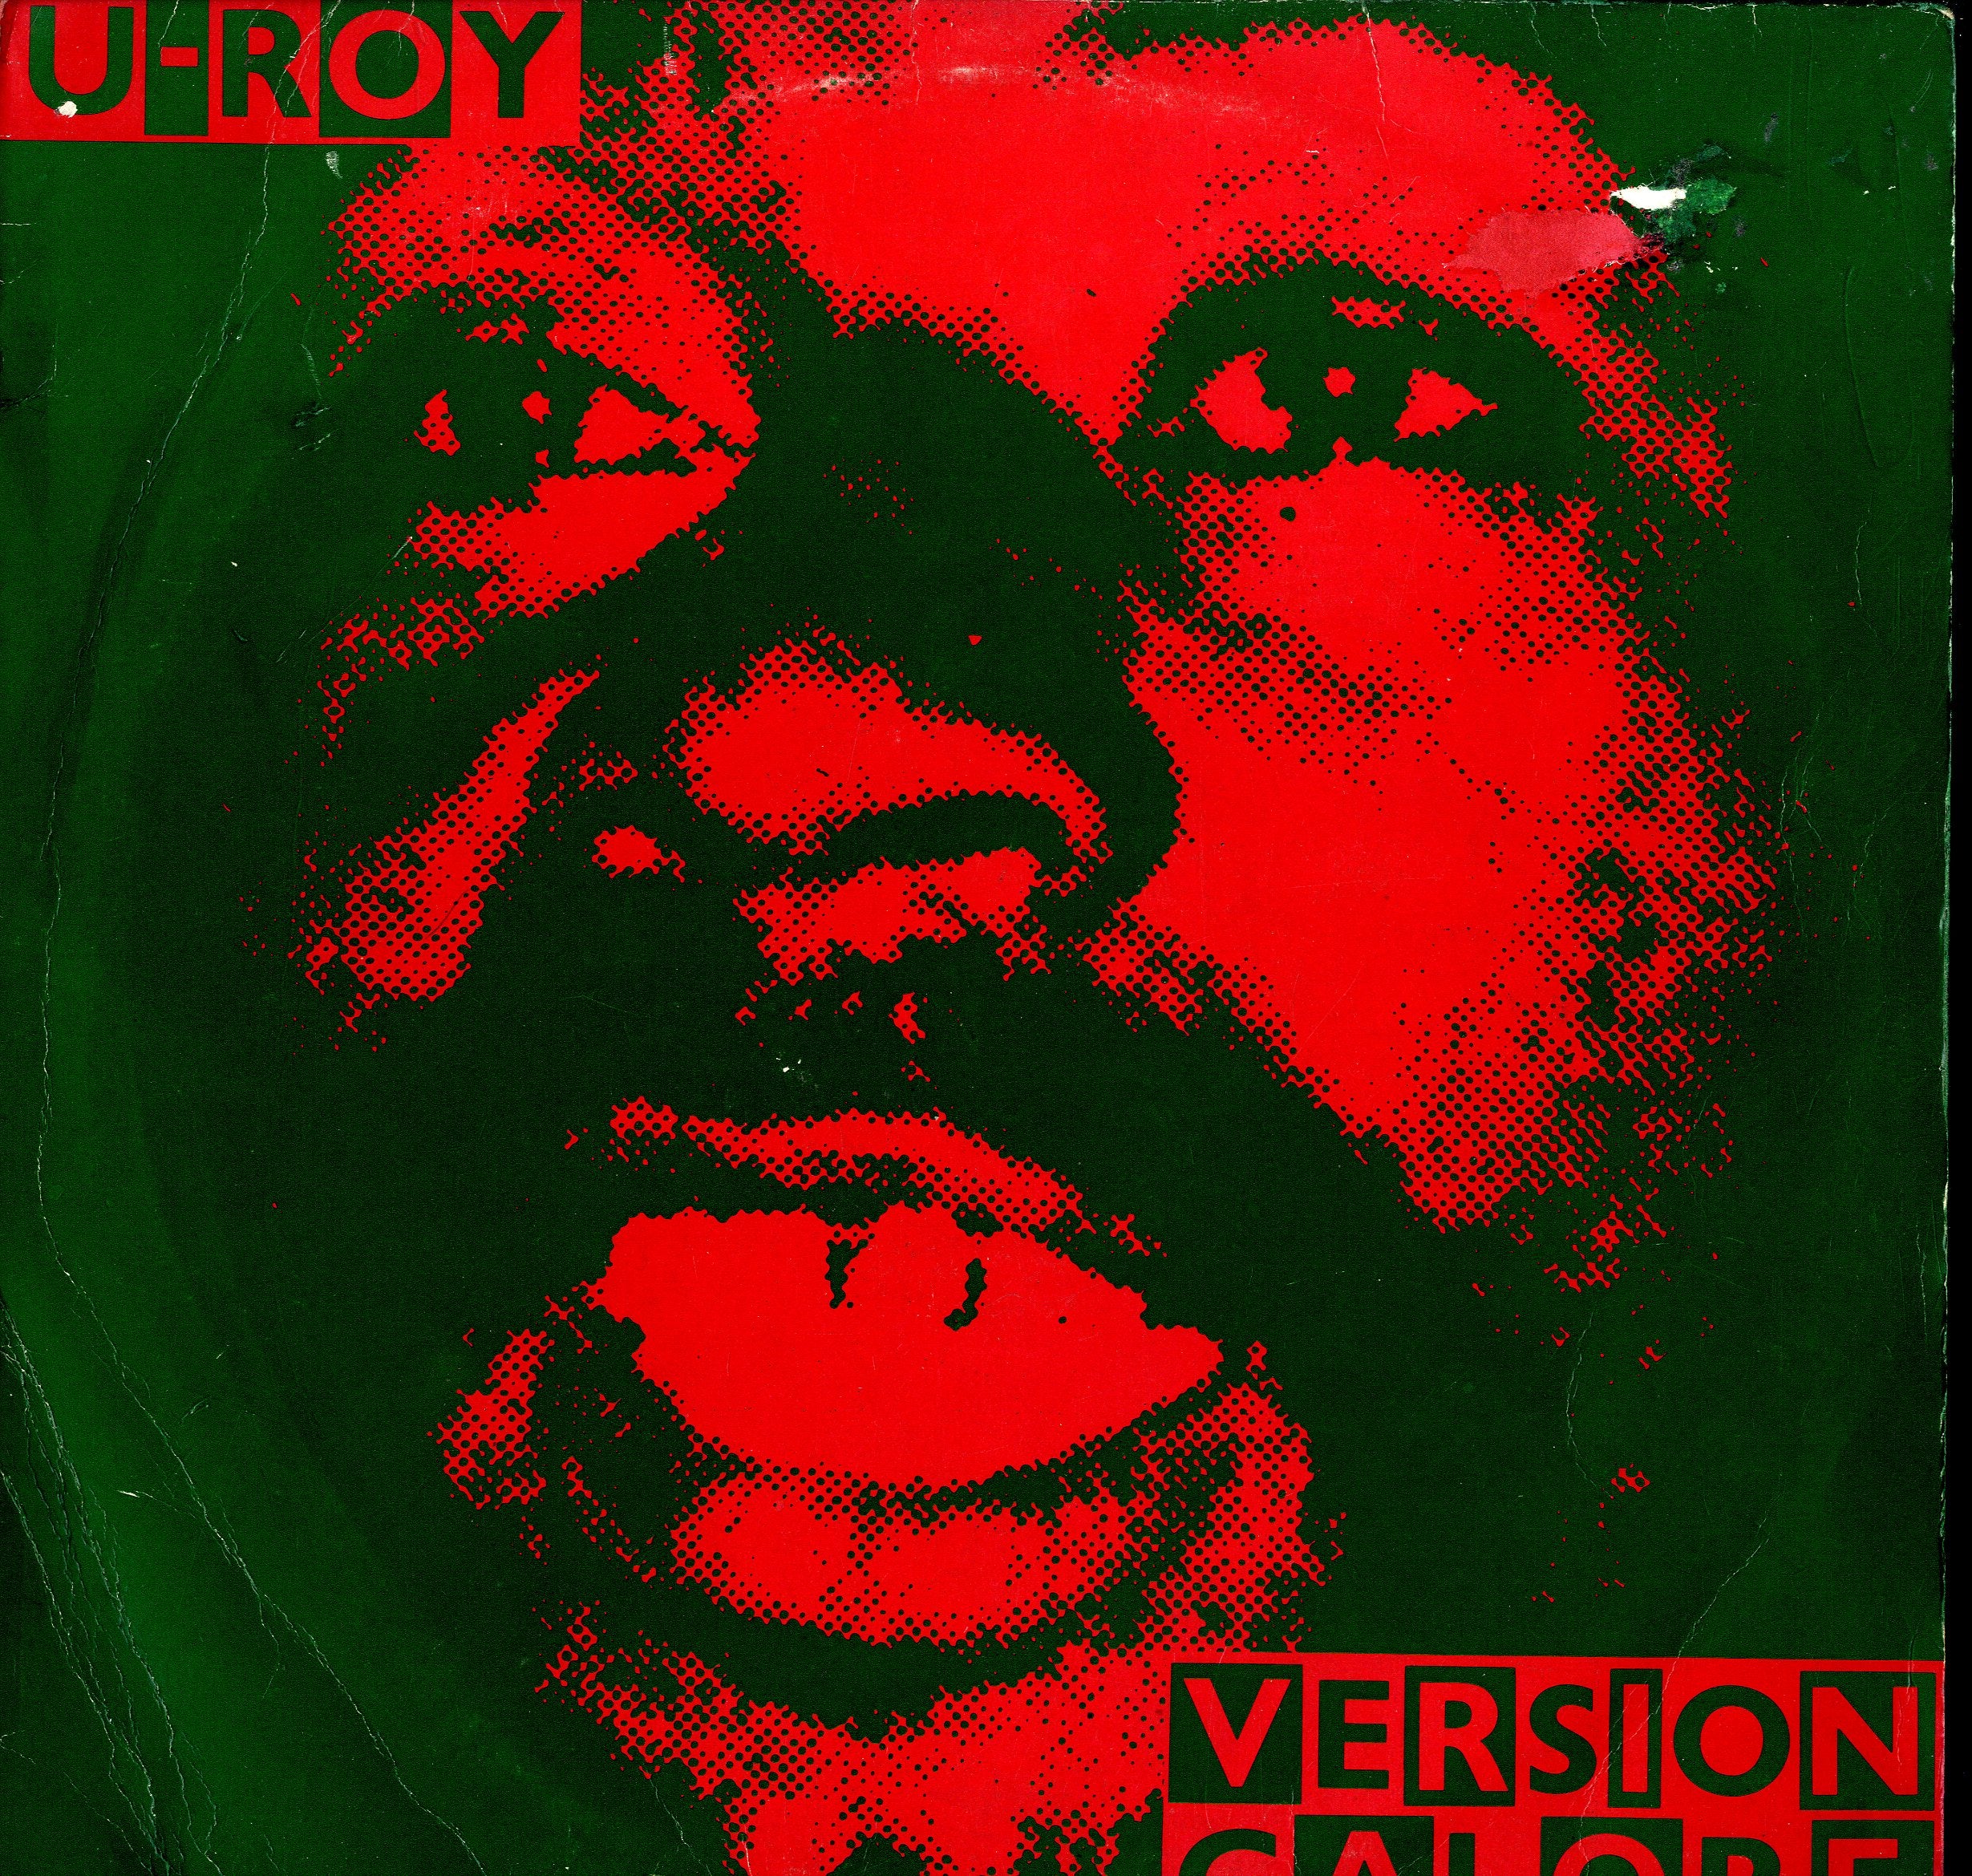 U - ROY [Version Galore]